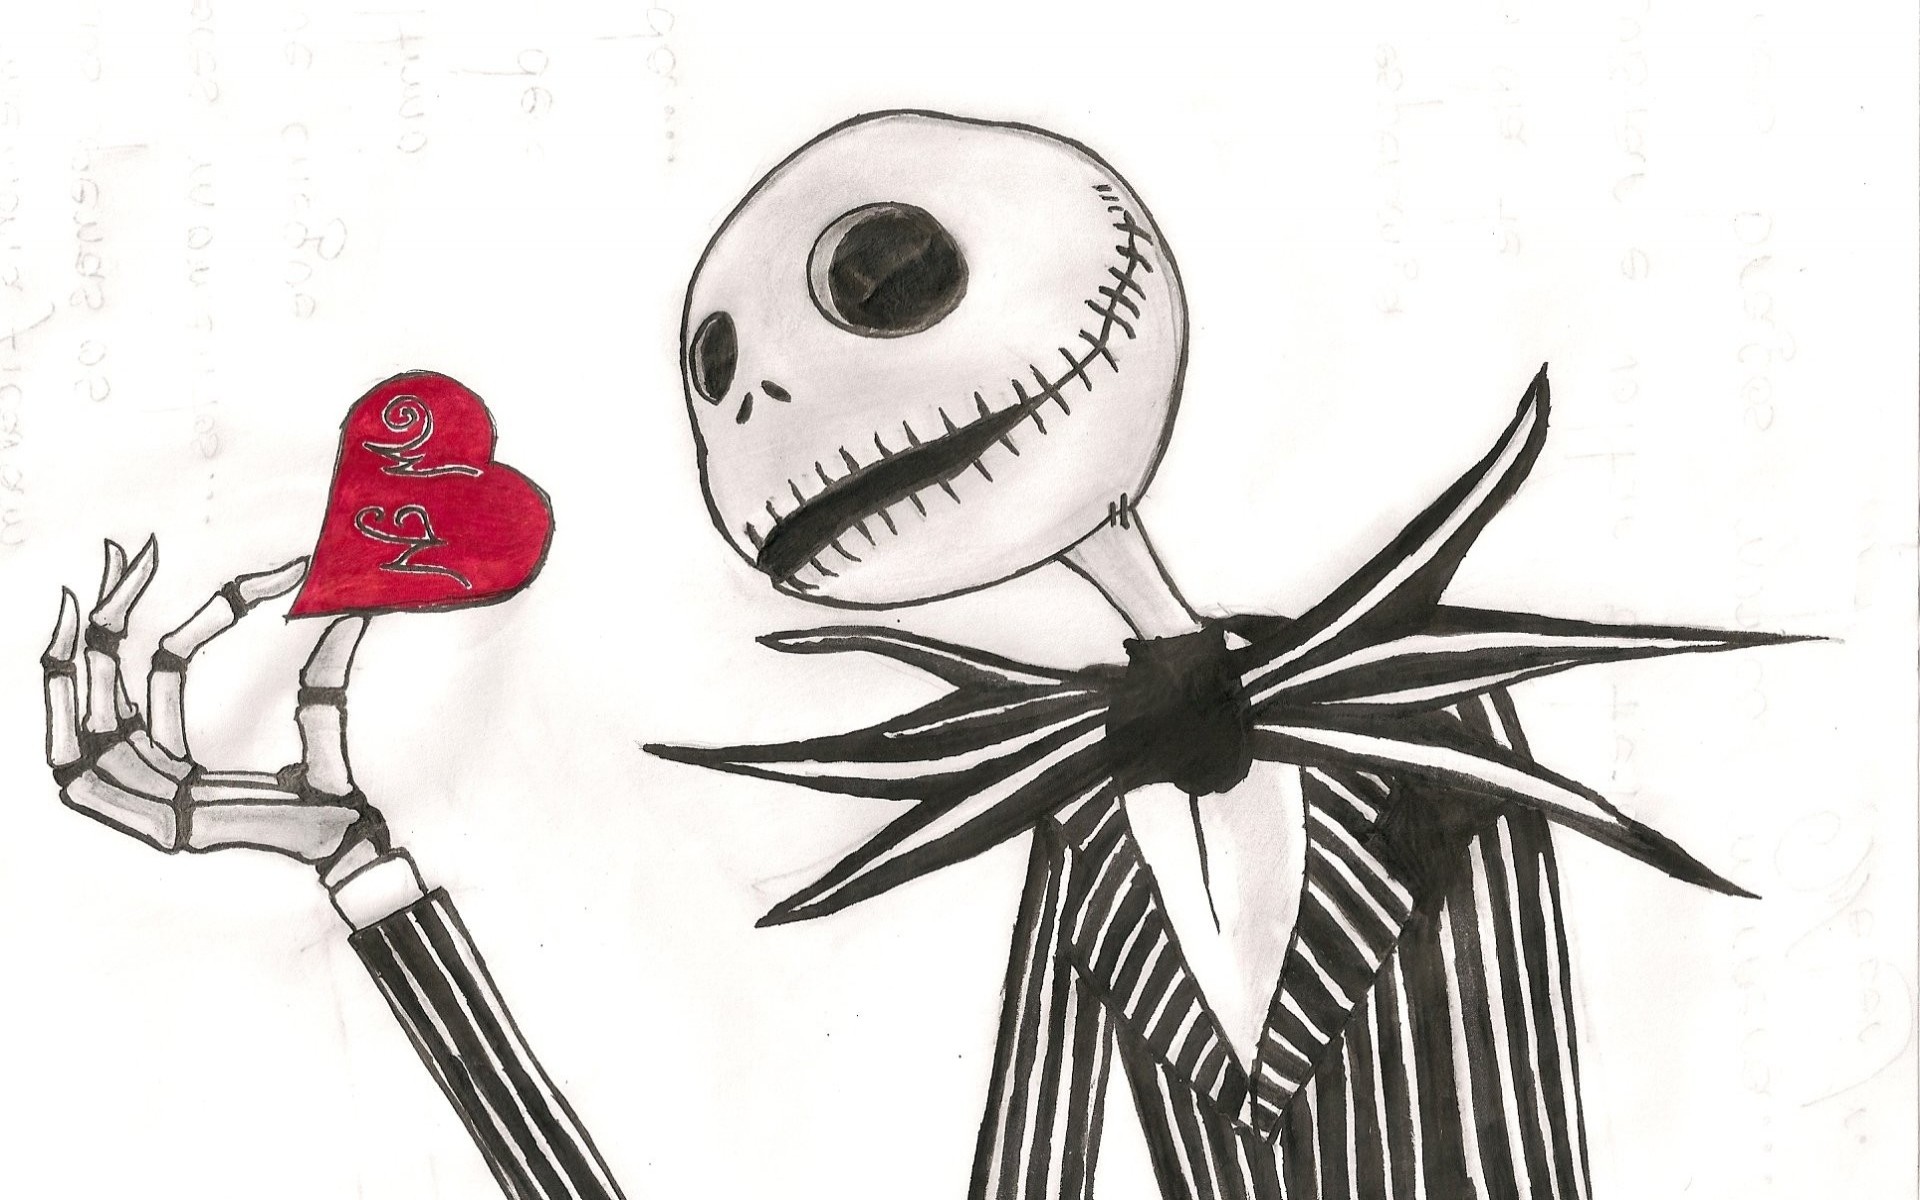 1920x1200 Jack skellington the nightmare before christmas dark skull love romance  mood art wallpaper |  | 28354 | WallpaperUP